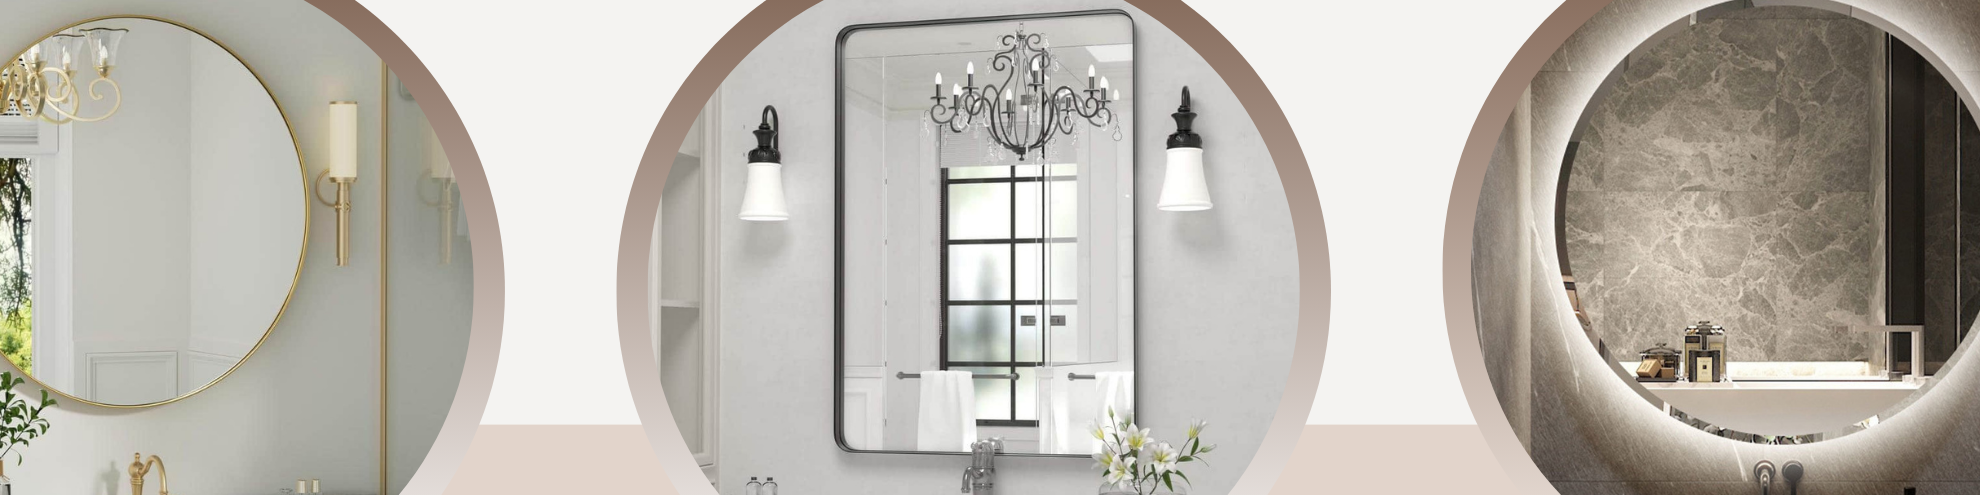 HY decoration Bathroom Mirrors